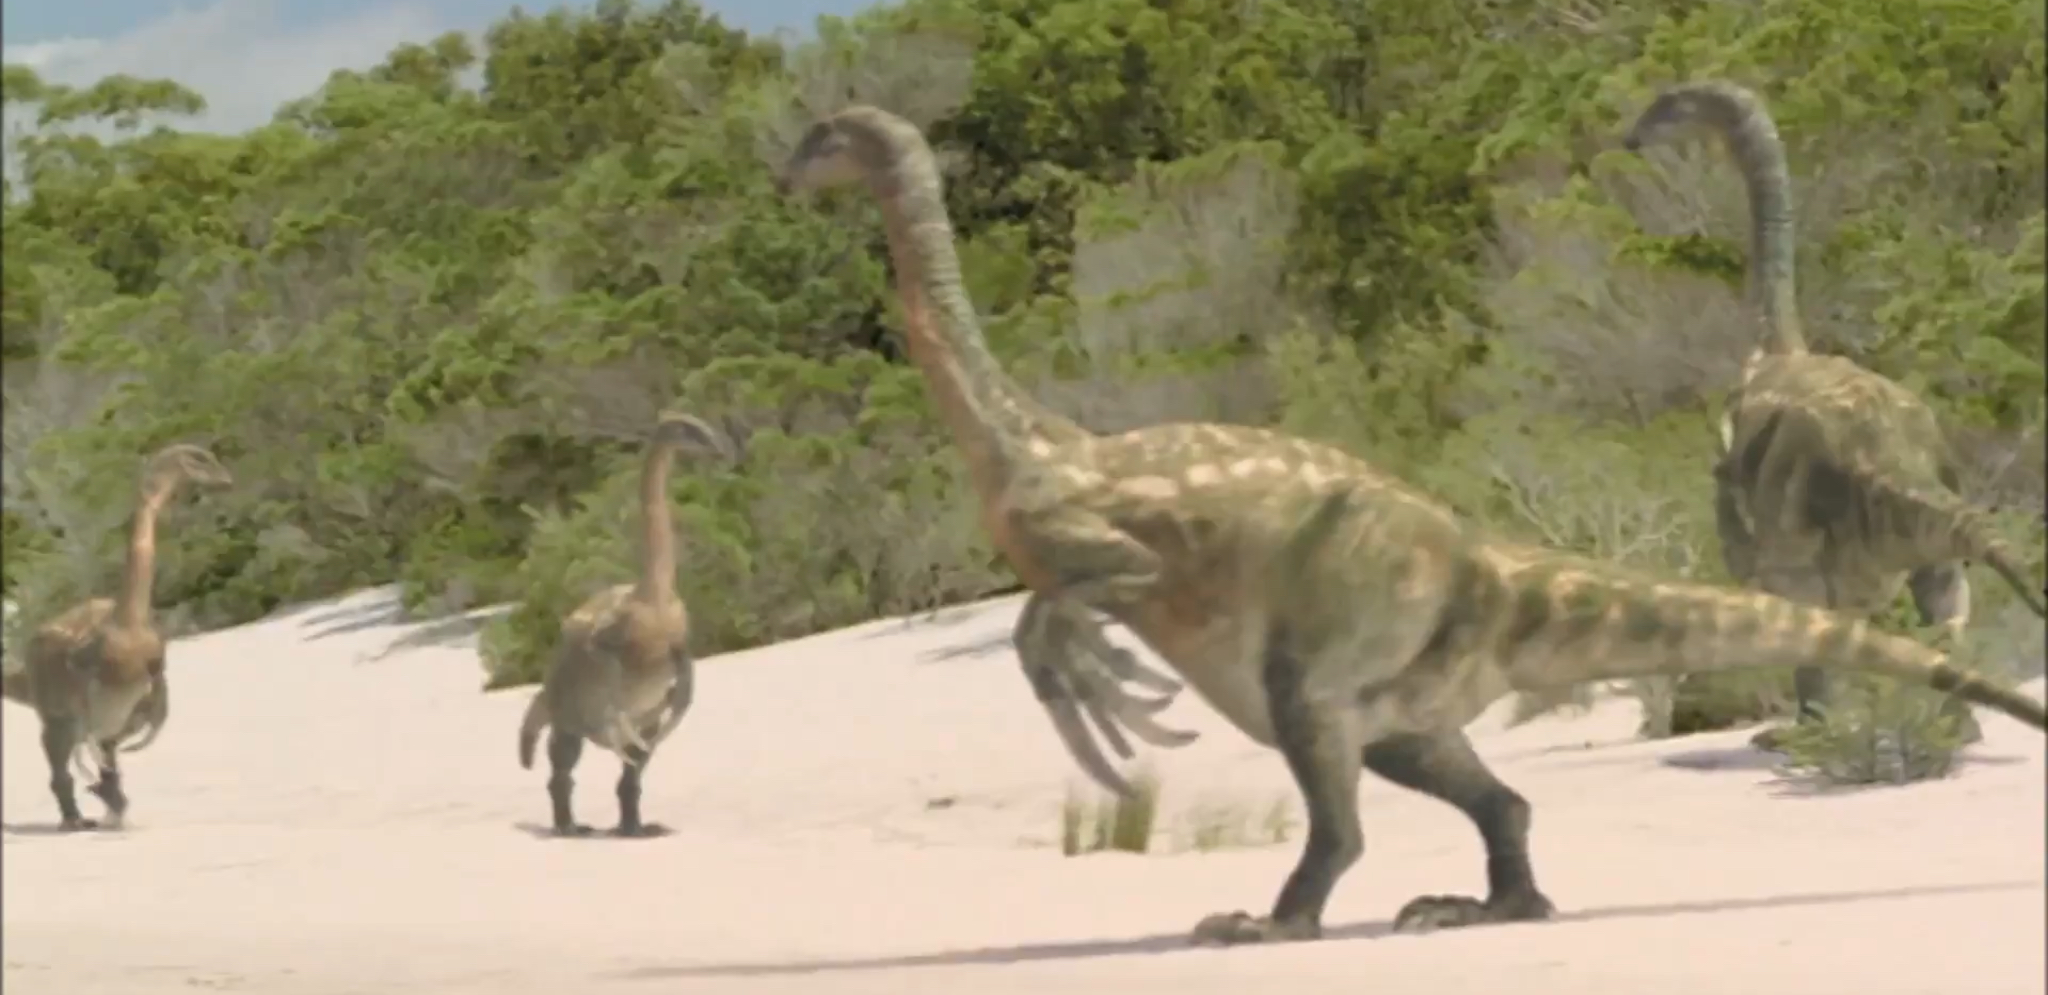 therizinosaurus walking with dinosaurs